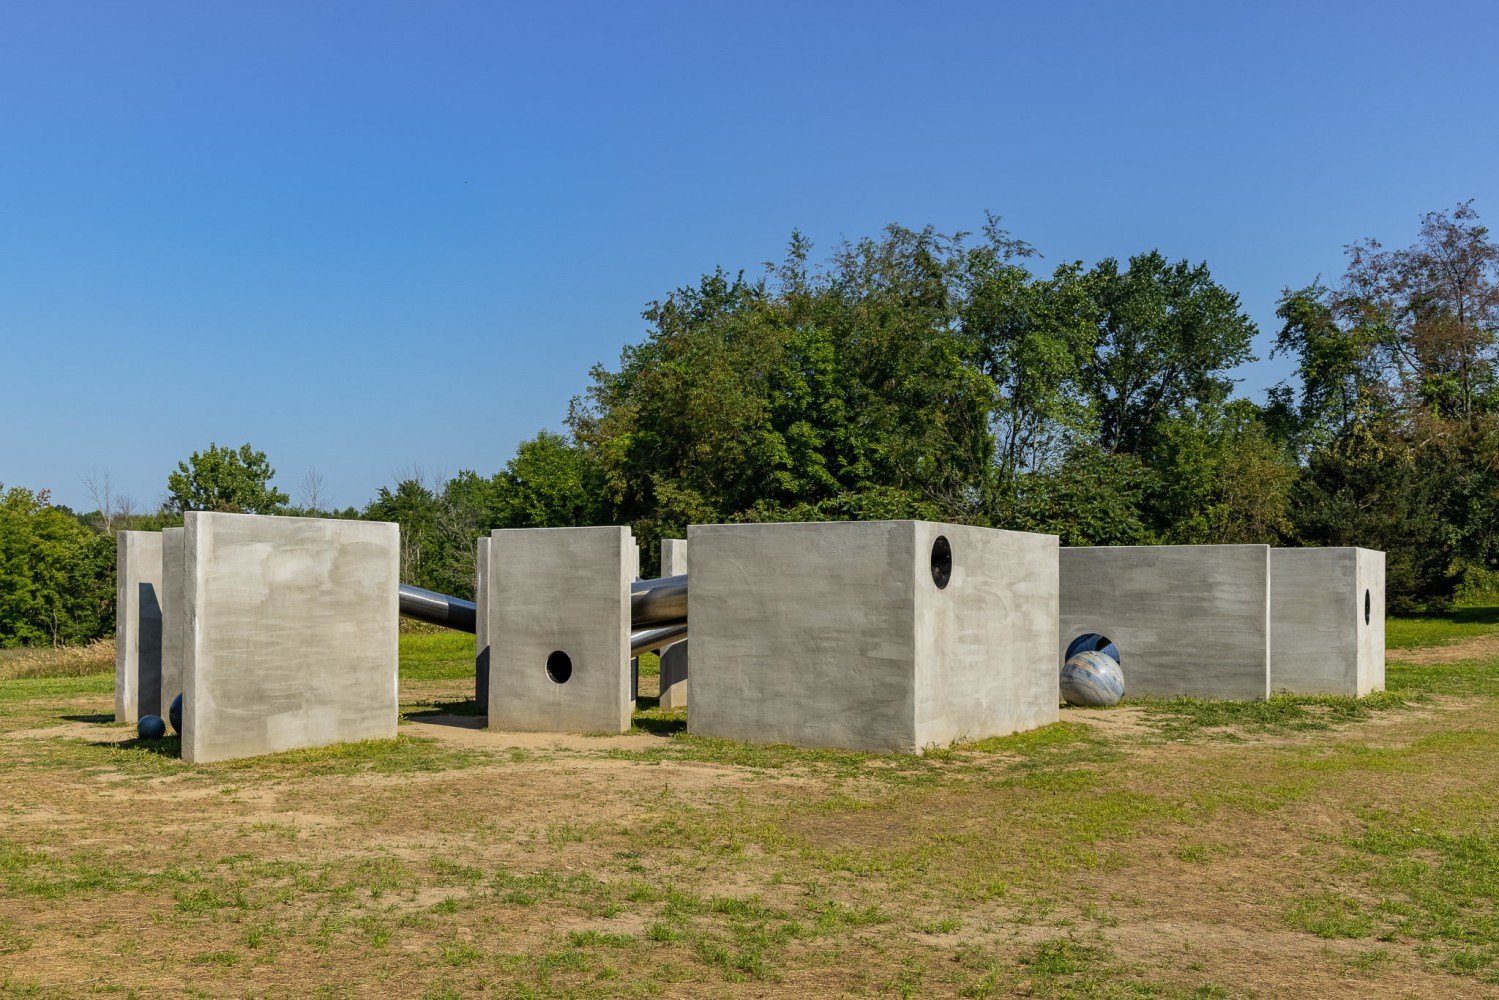 Alicja Kwade,&amp;nbsp;
TunnelTeller, 2018

Stainless steel, concrete, natural stone (Macaubas azul)
Installation view: Art Omi, Ghent, NY, 2021
Photo: Alon Koppel

&amp;nbsp;

&amp;nbsp;





